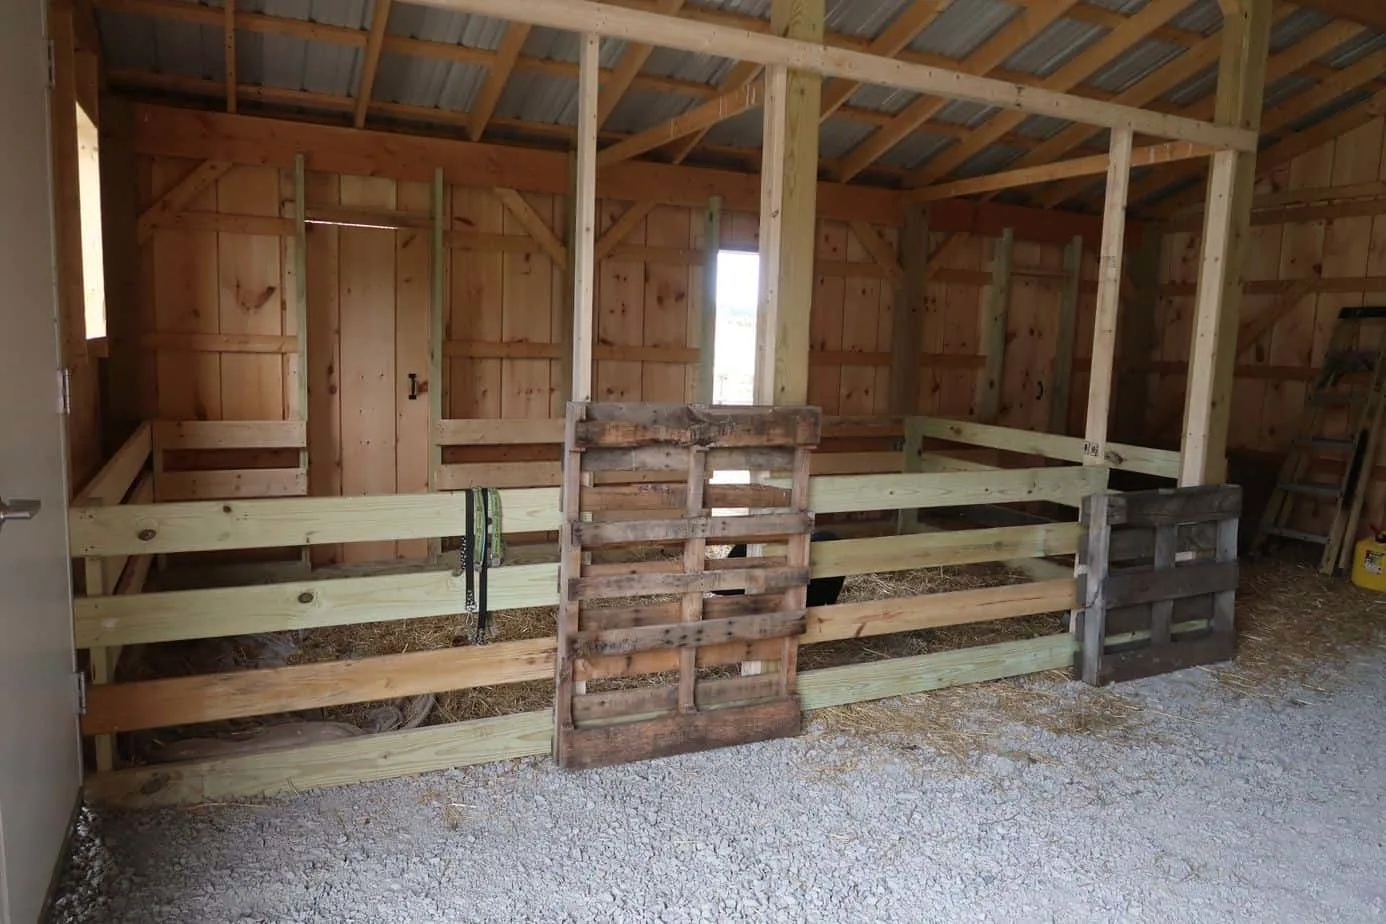 pig fence inside the barn 